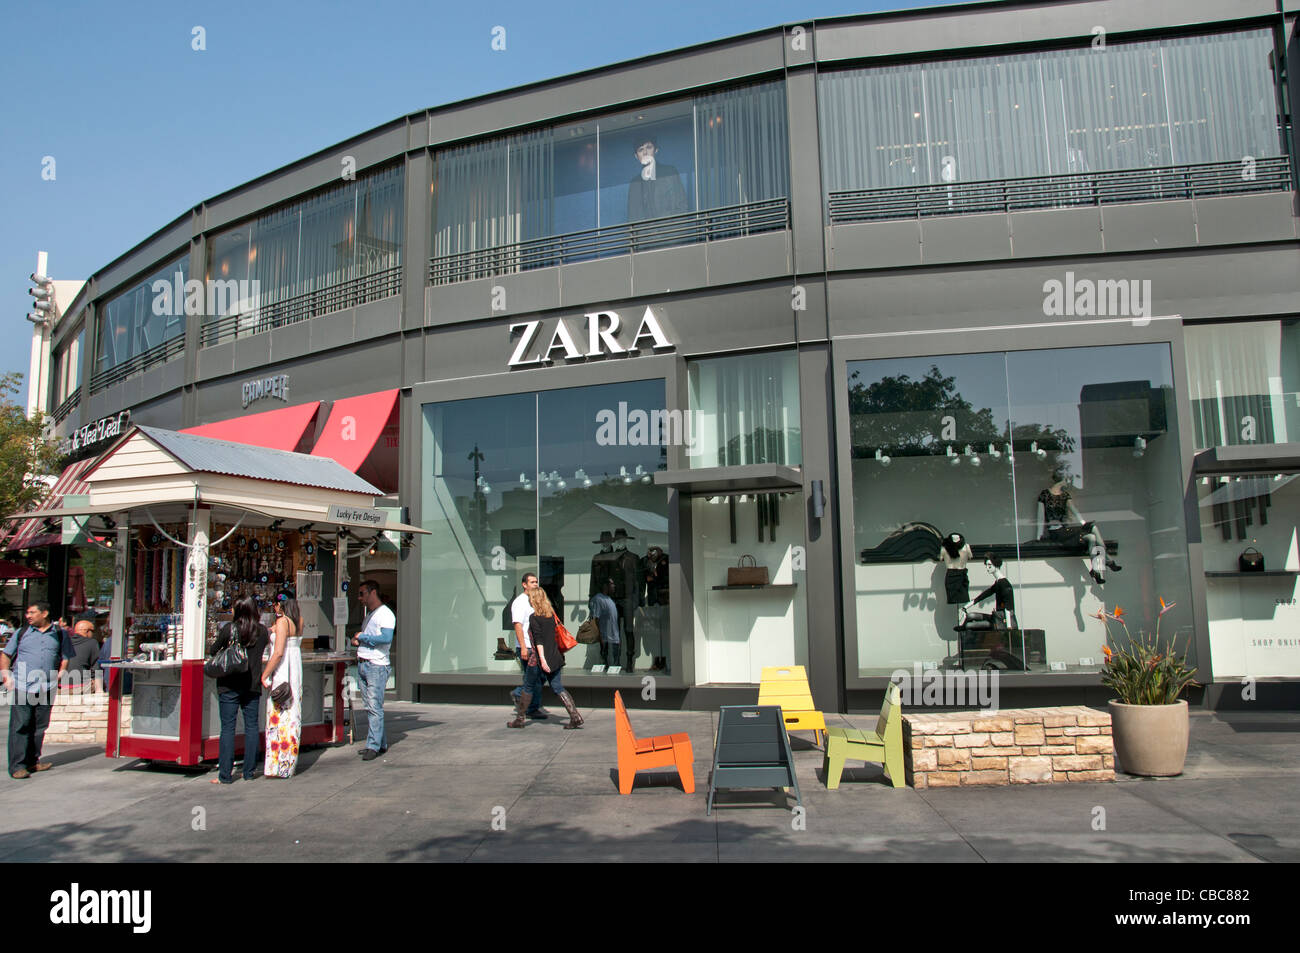 Zara man hi-res stock photography and images - Alamy